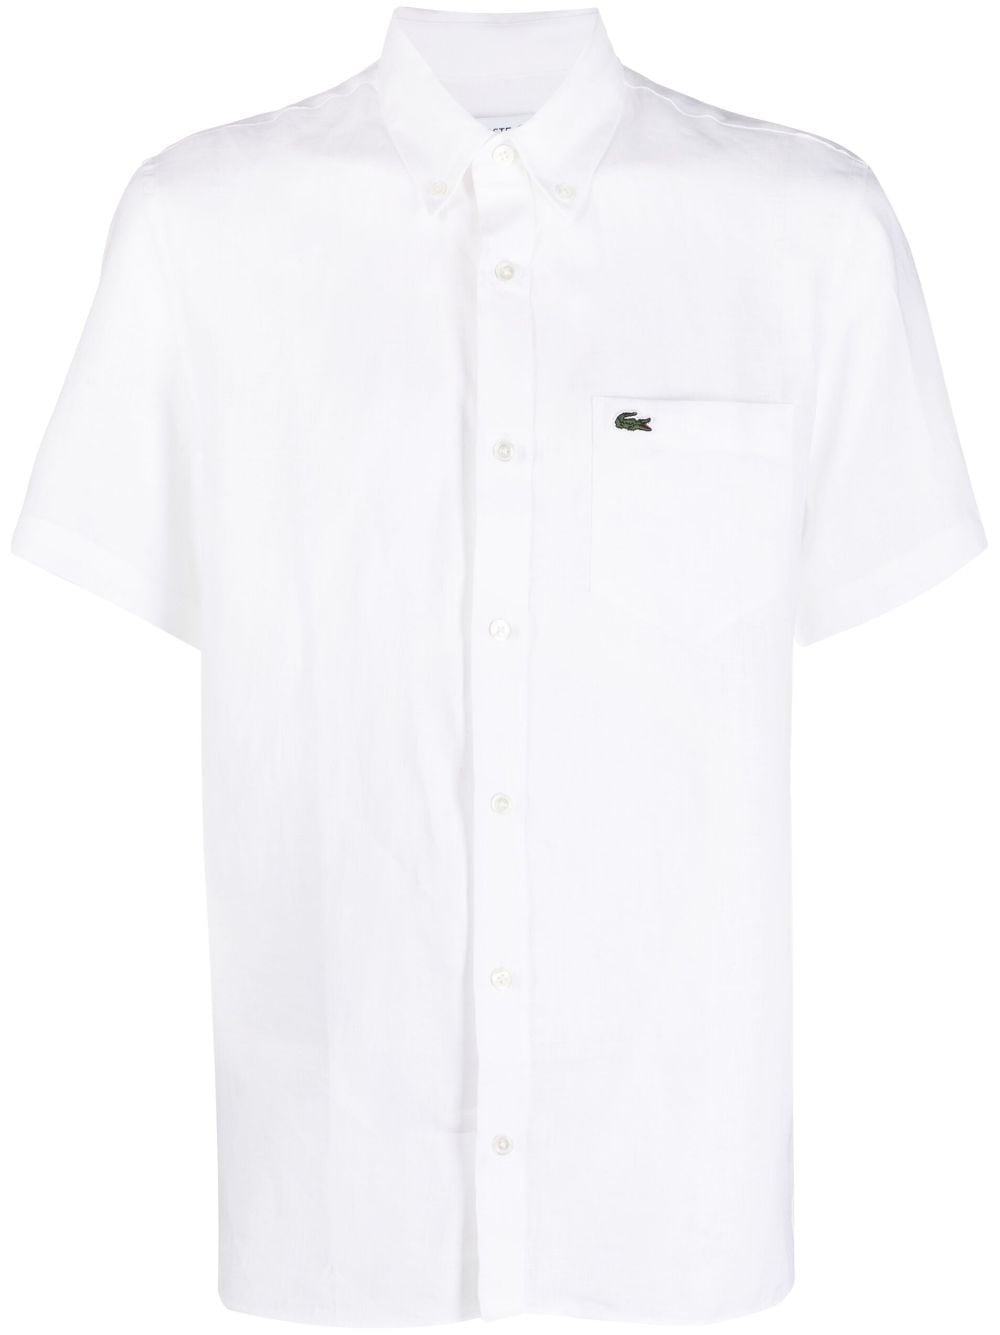 Embroidered logo short-sleeve shirt<BR/><BR/>